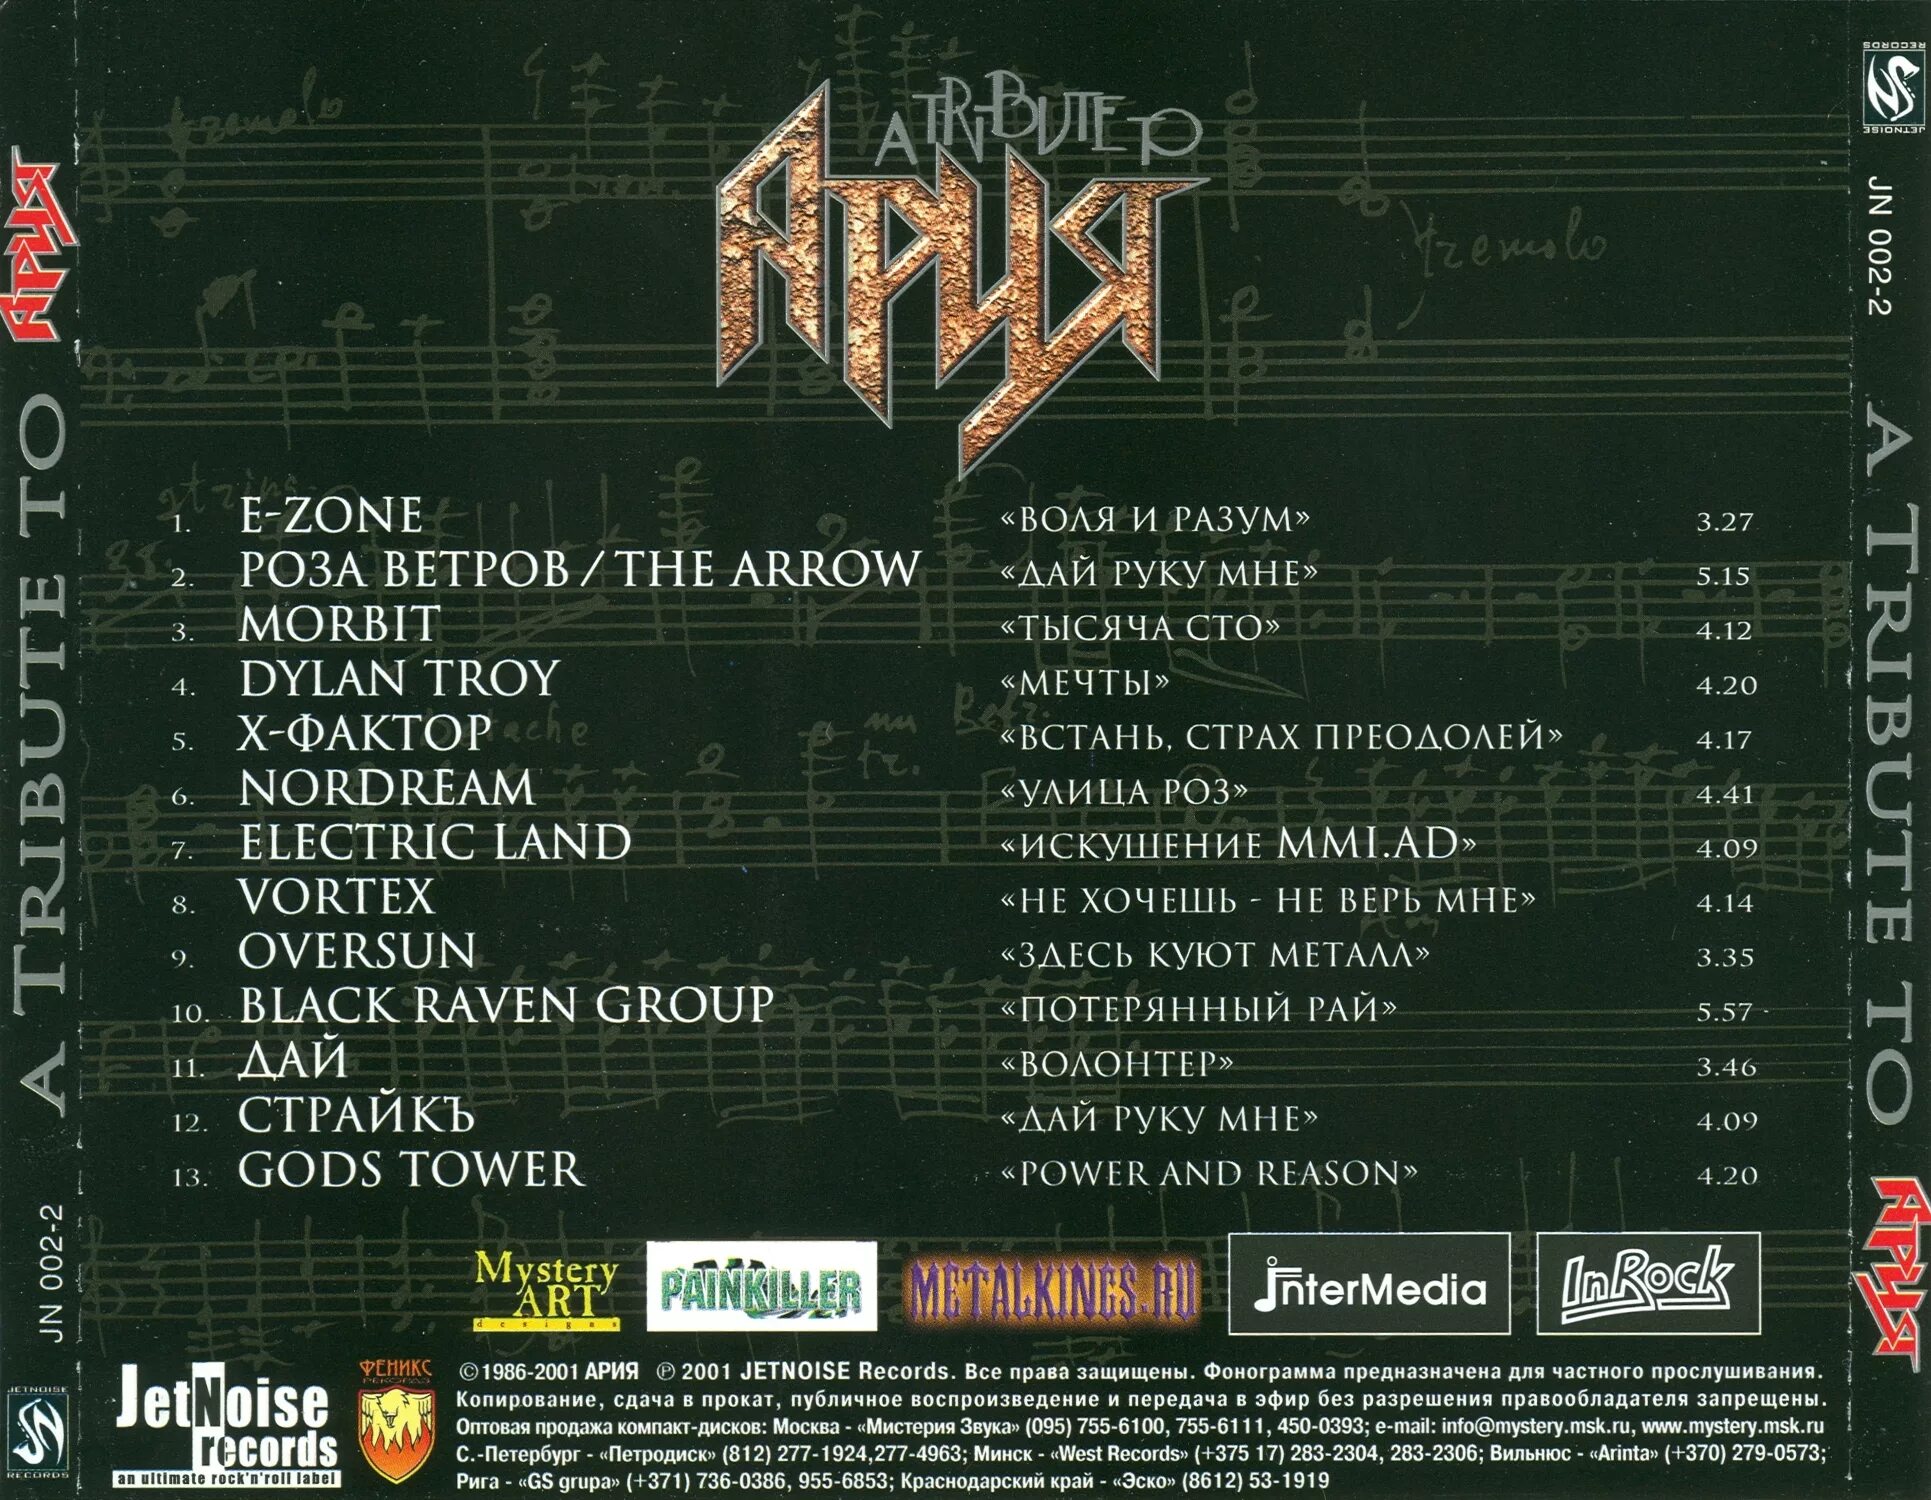 Акт ария. Ария Tribute to 2001. A Tribute to Ария. Трибьют-альбом трибьют-альбомы. Хронология группы Ария.